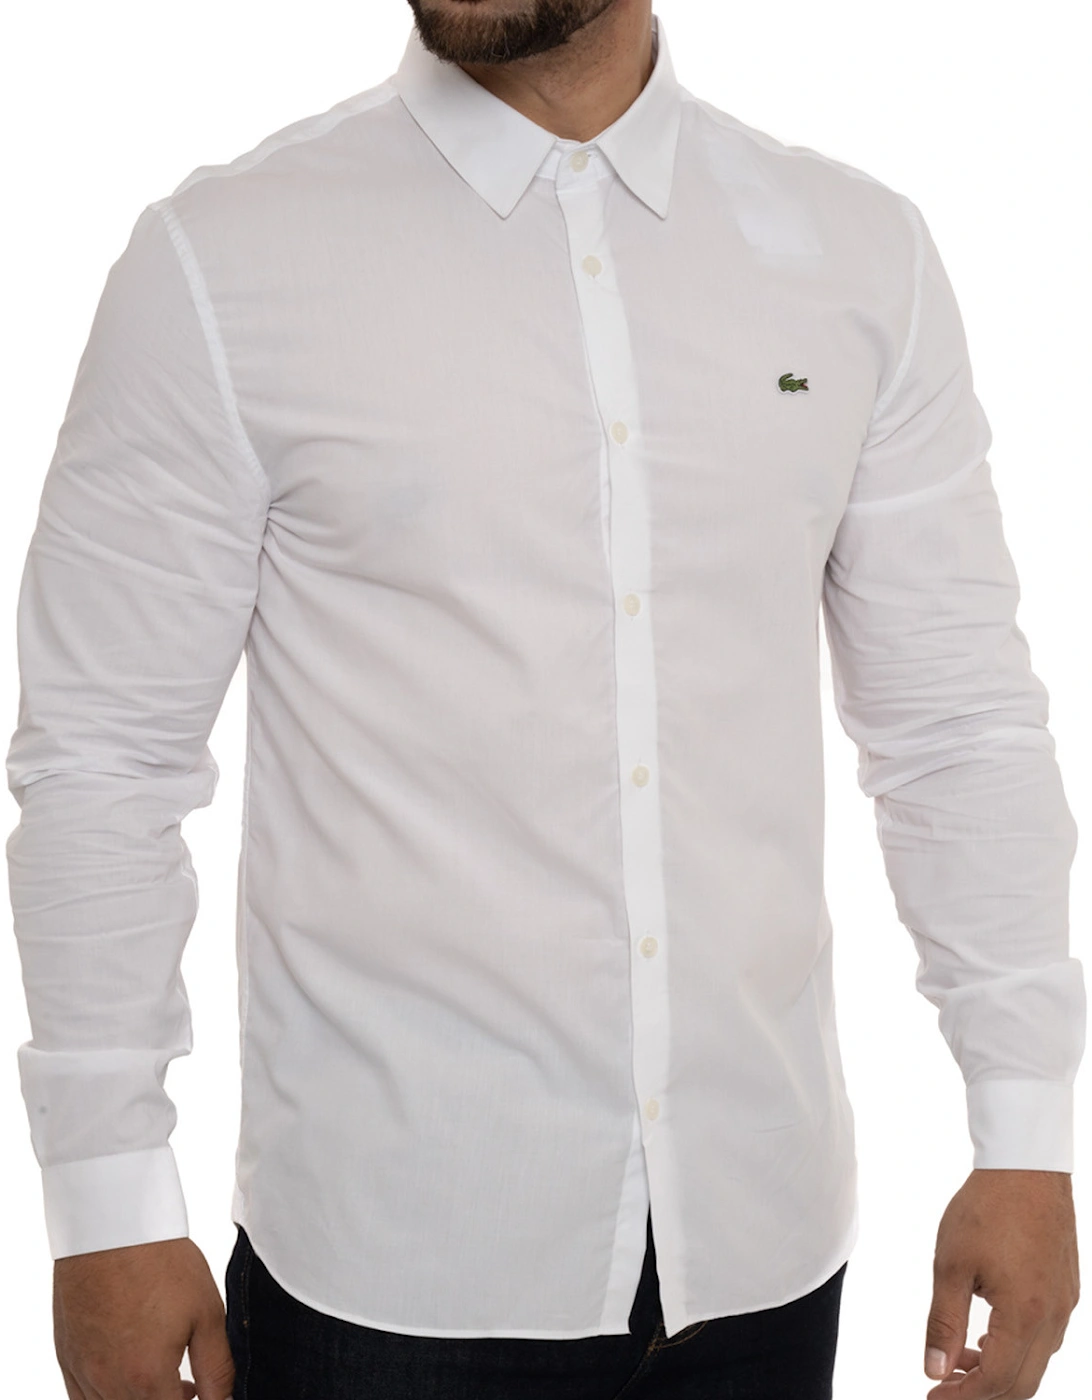 Mens Slim Fit Shirt (White)